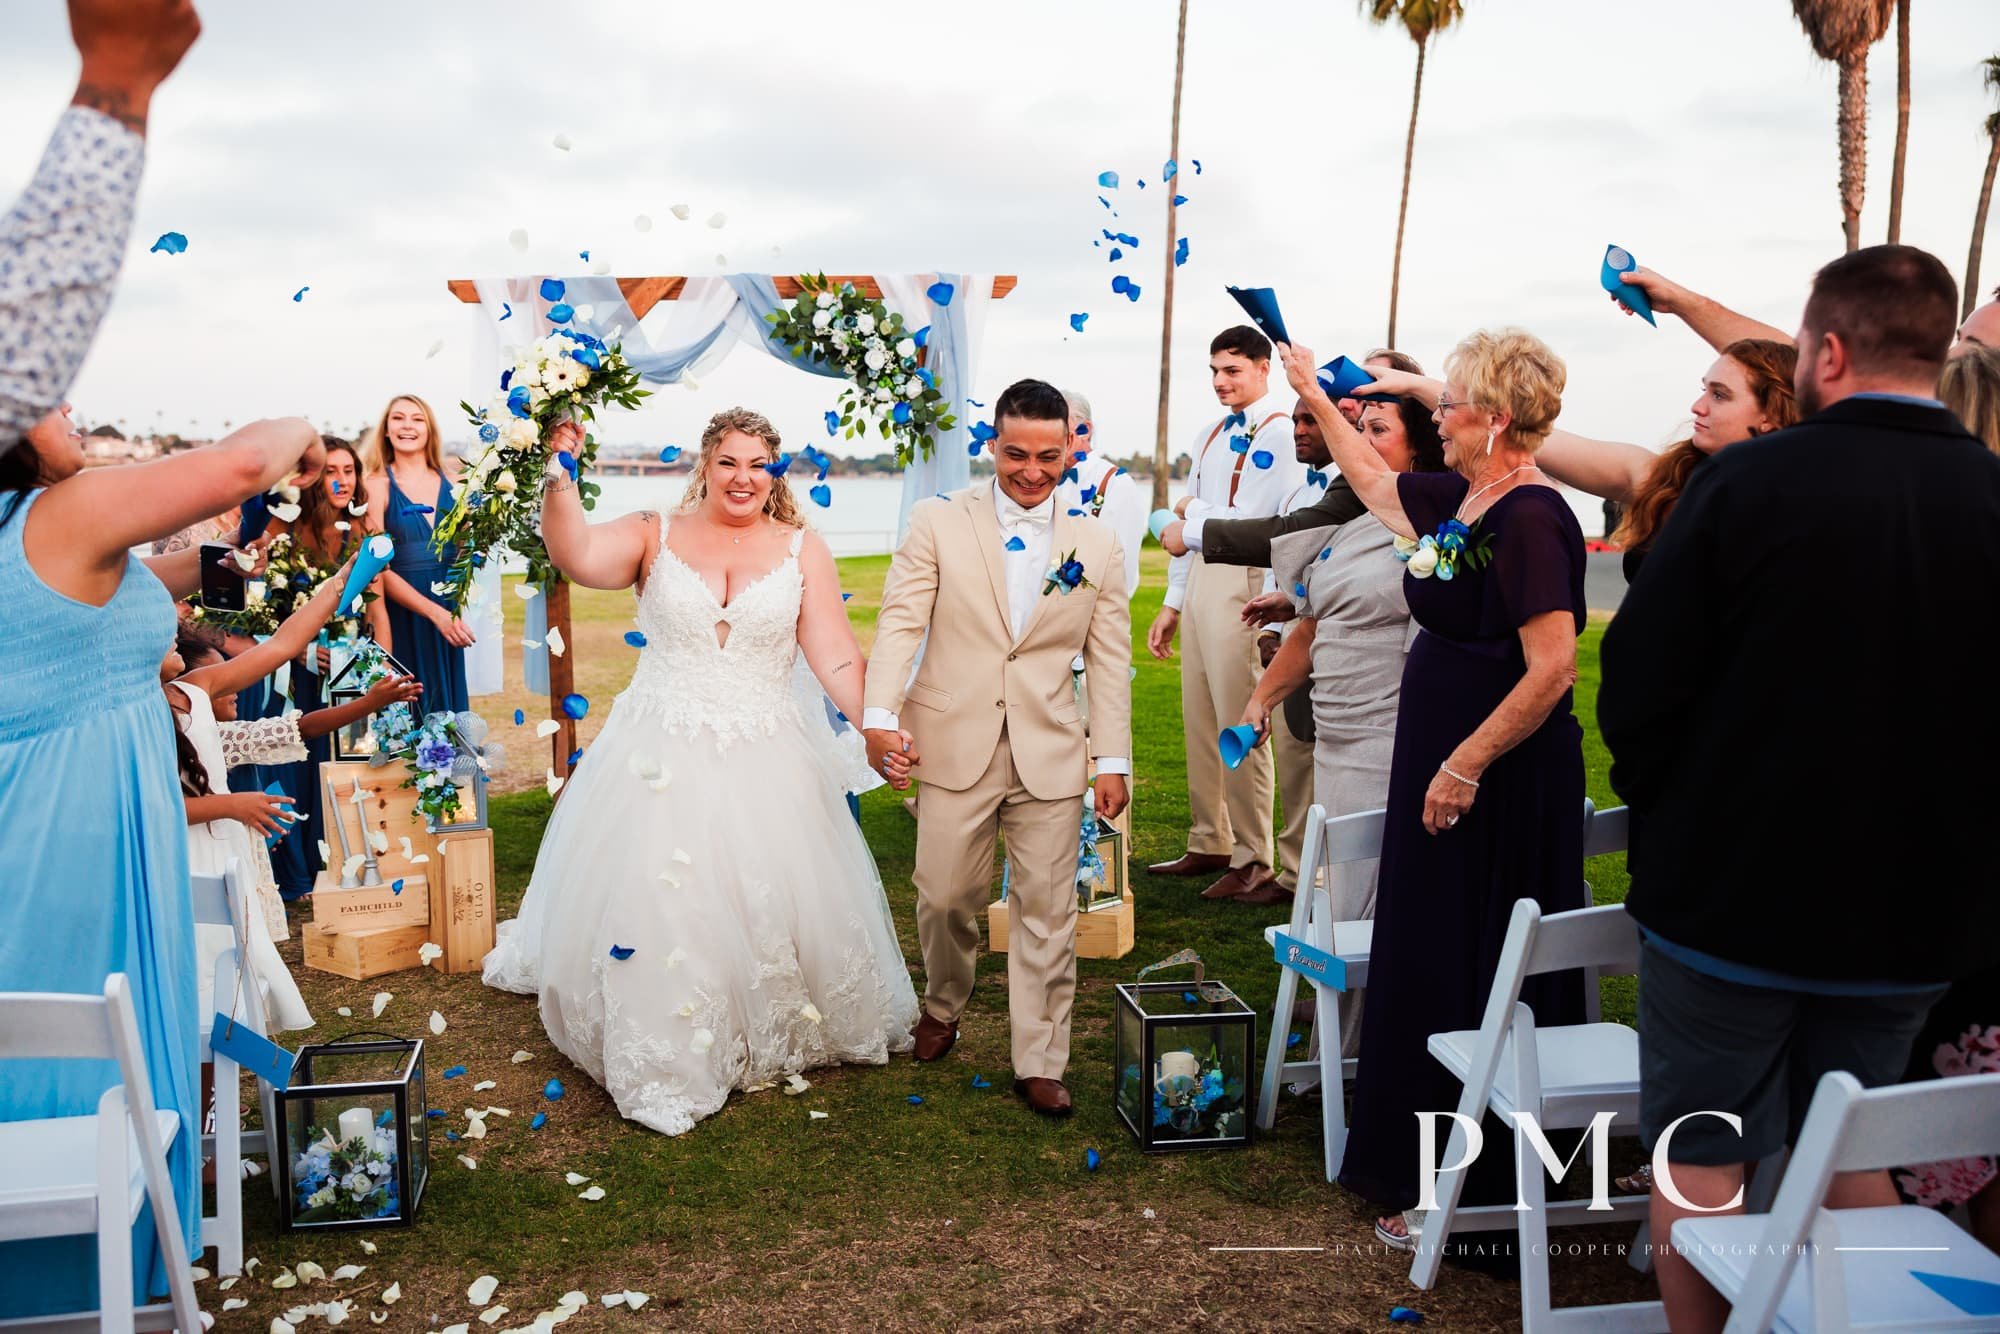 Tower Beach Club - Mission Bay - Best San Diego Wedding Photographer-13.jpg